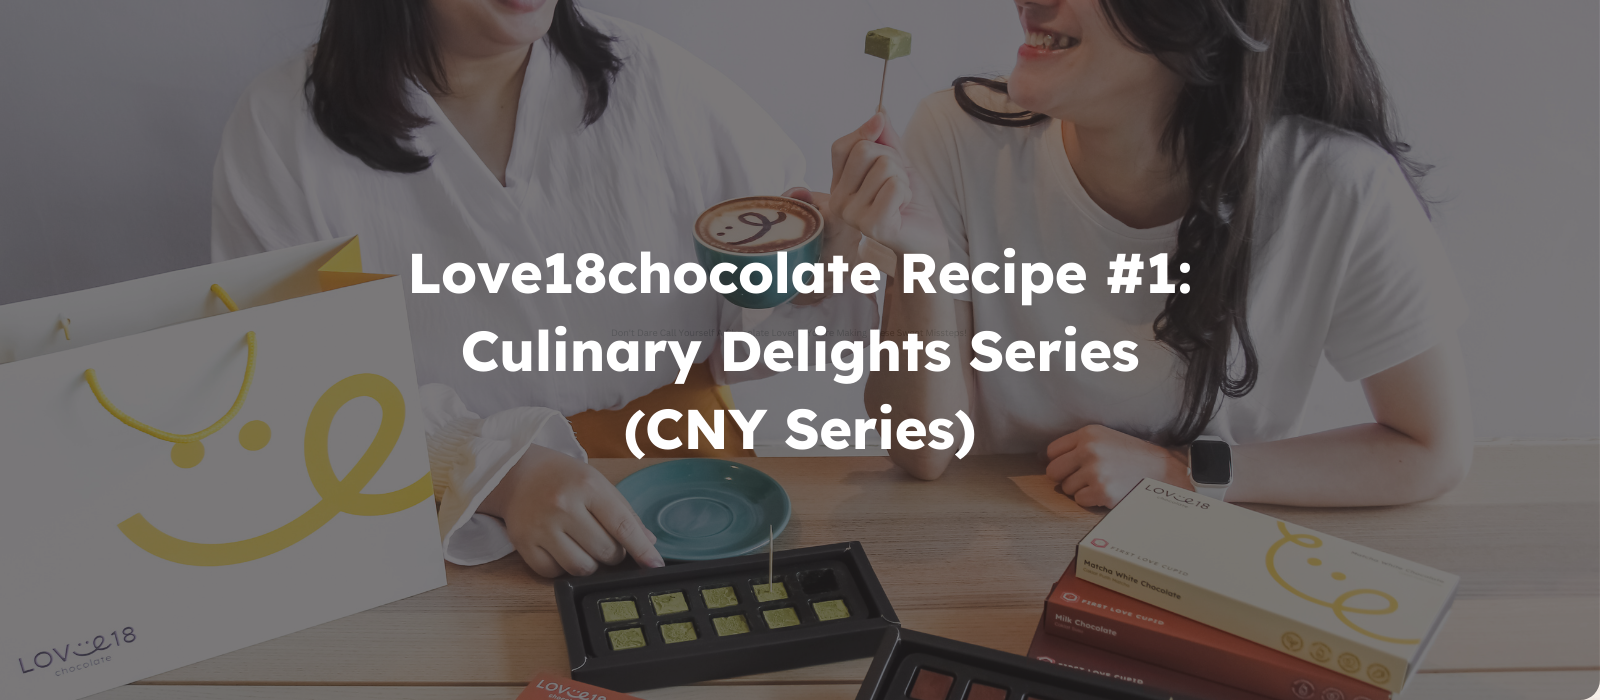 Love18chocolate Recipe #1: Culinary Delights Series